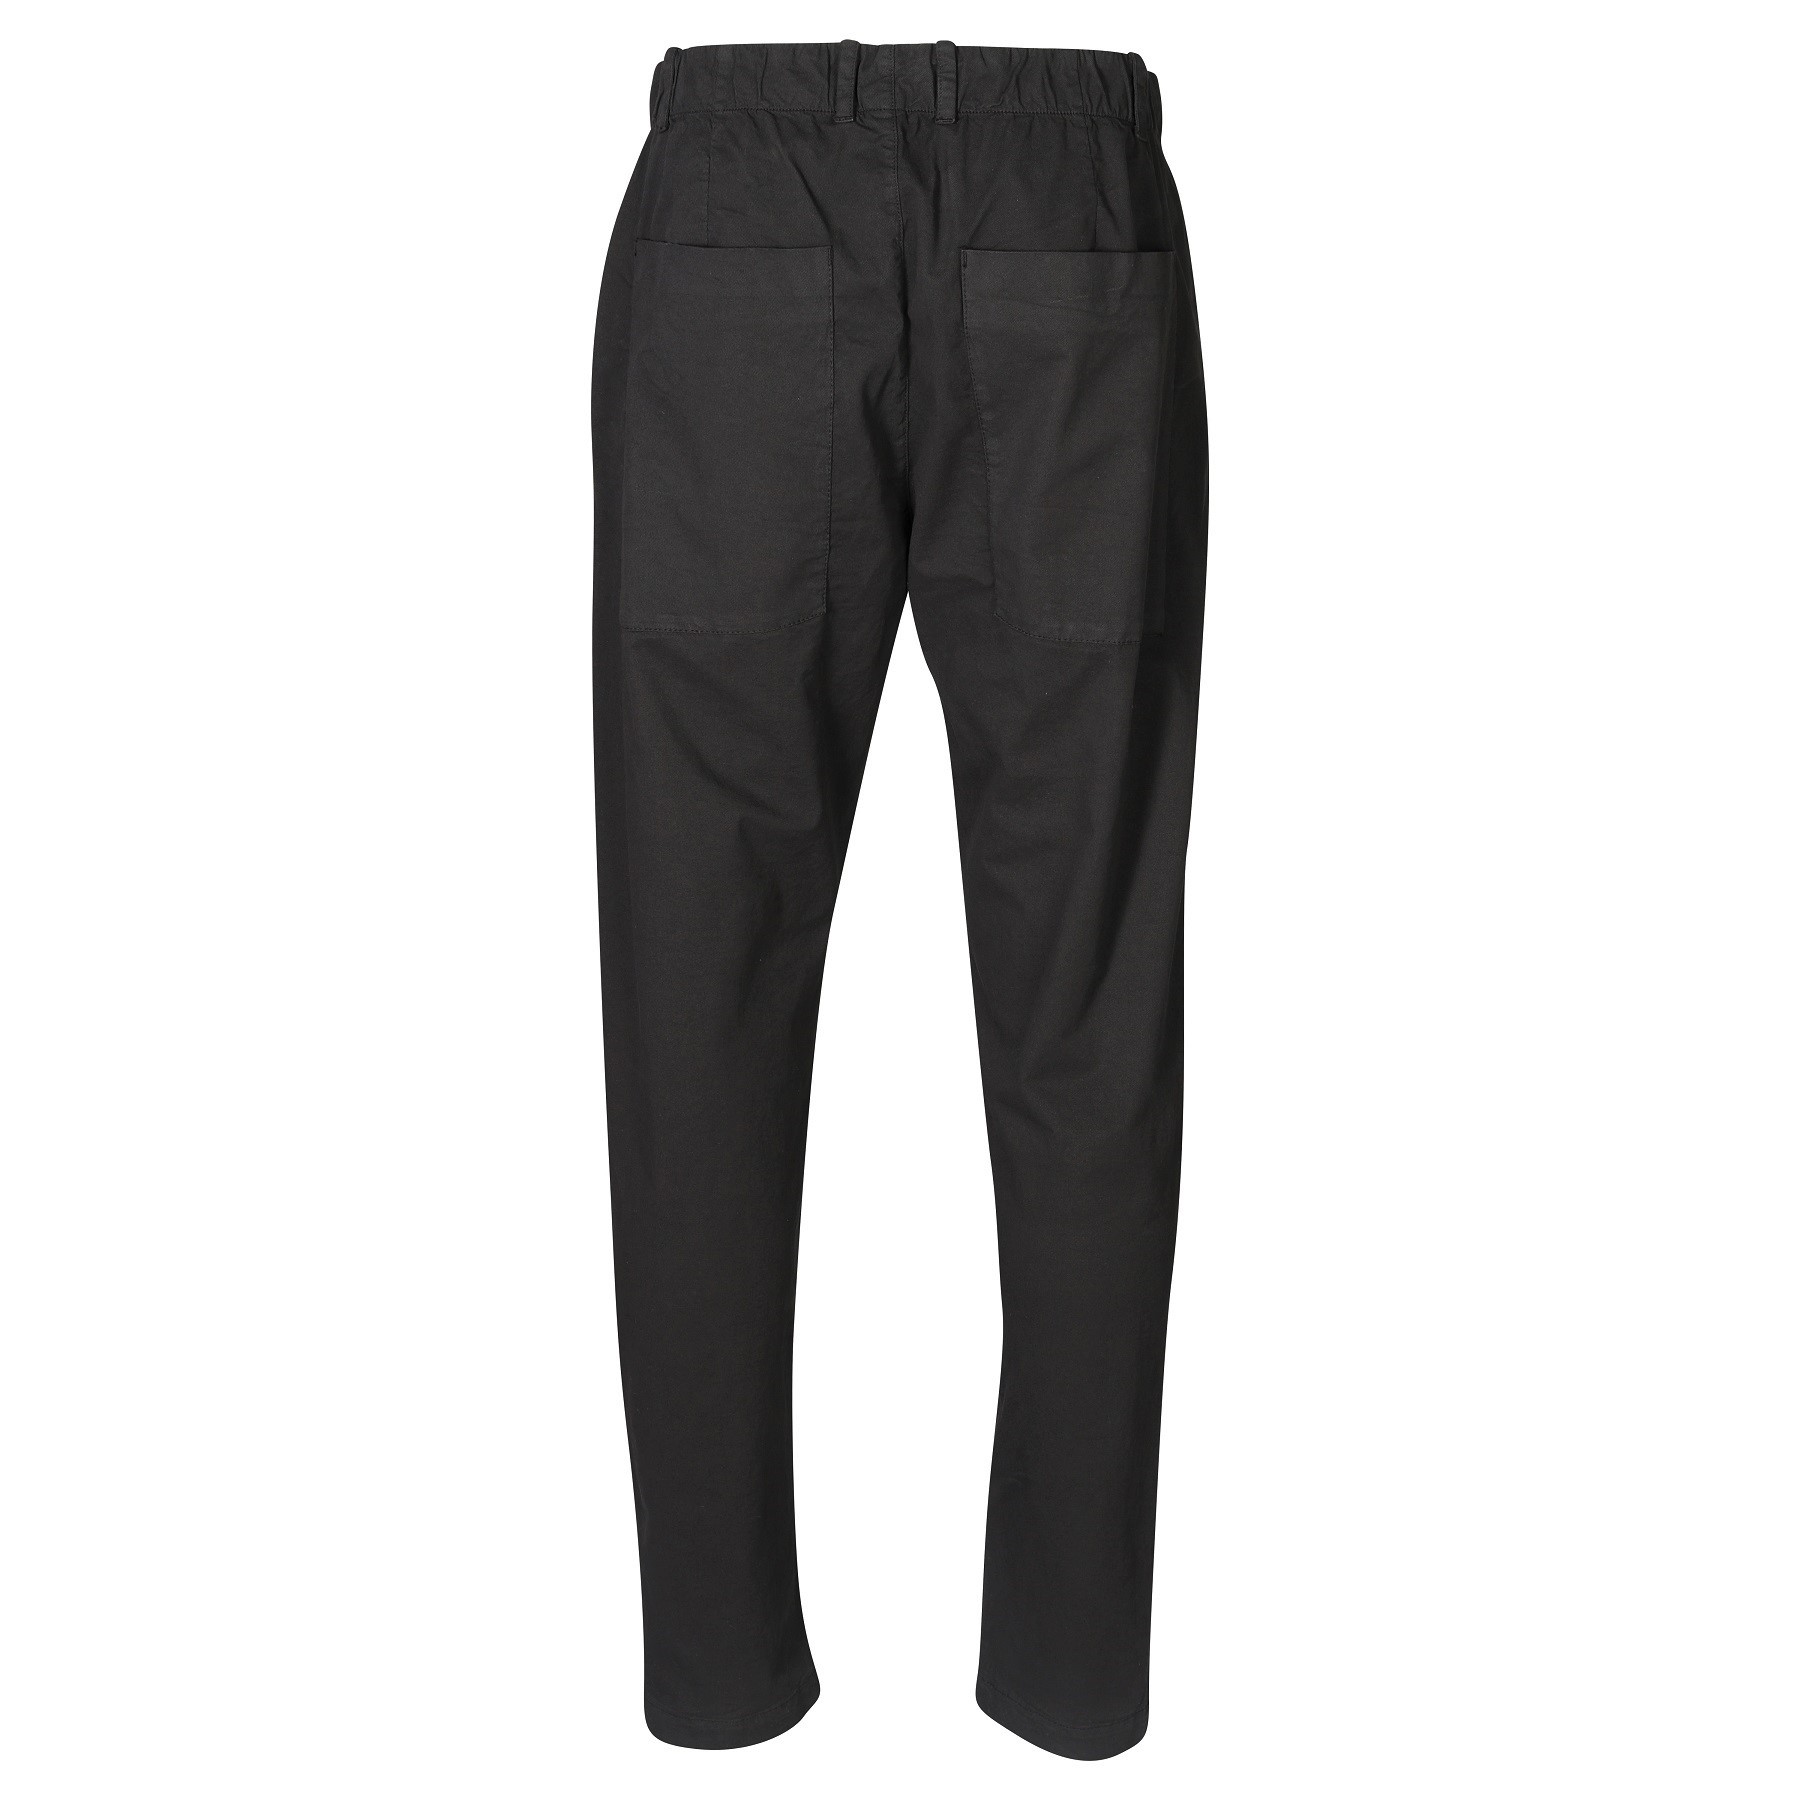 TRANSIT UOMO Light Cotton Stretch Trouser in Black L